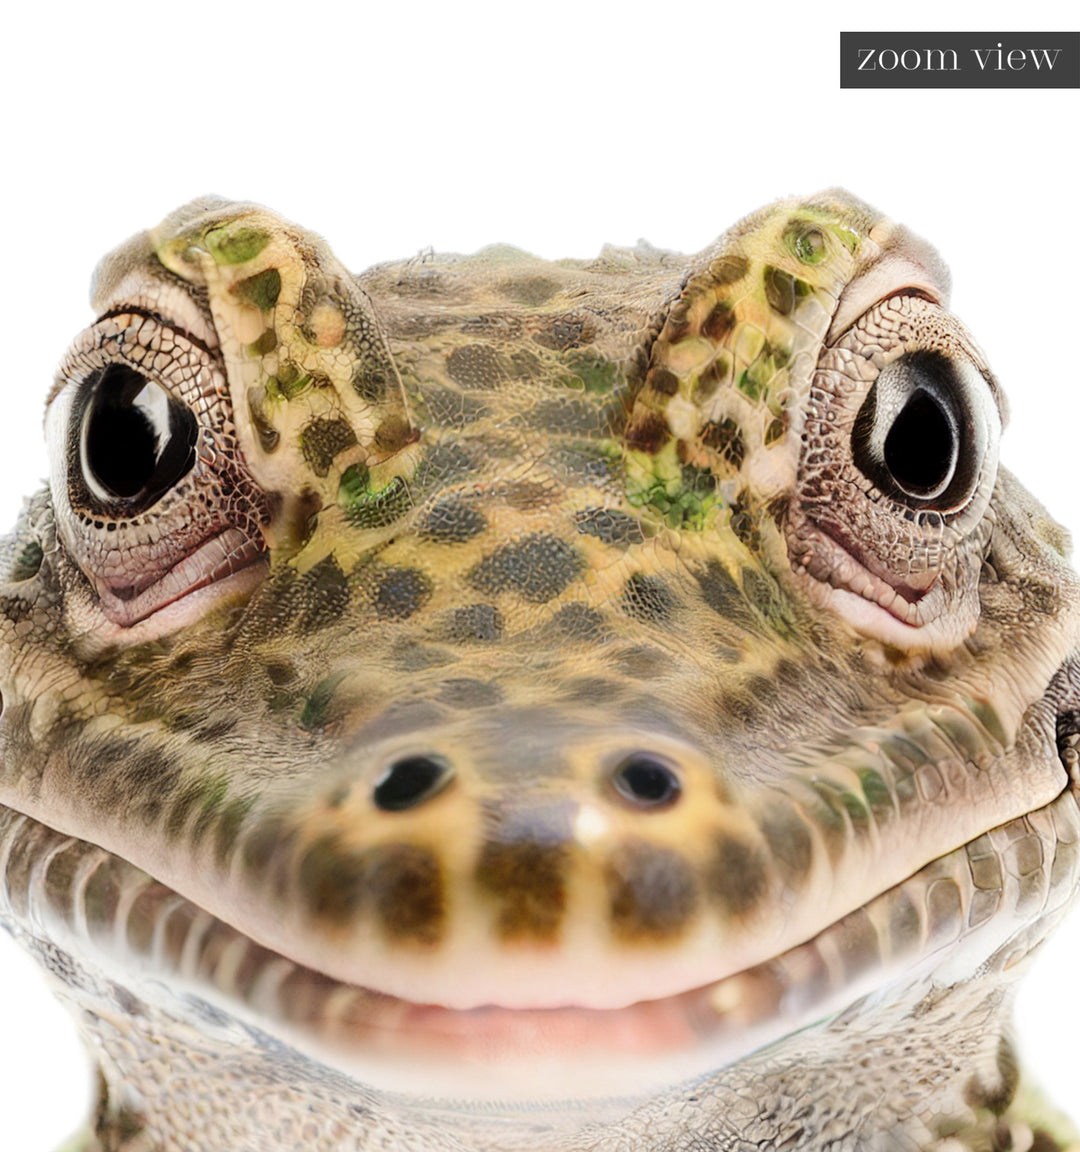 Baby Alligator Art Print - zoom view